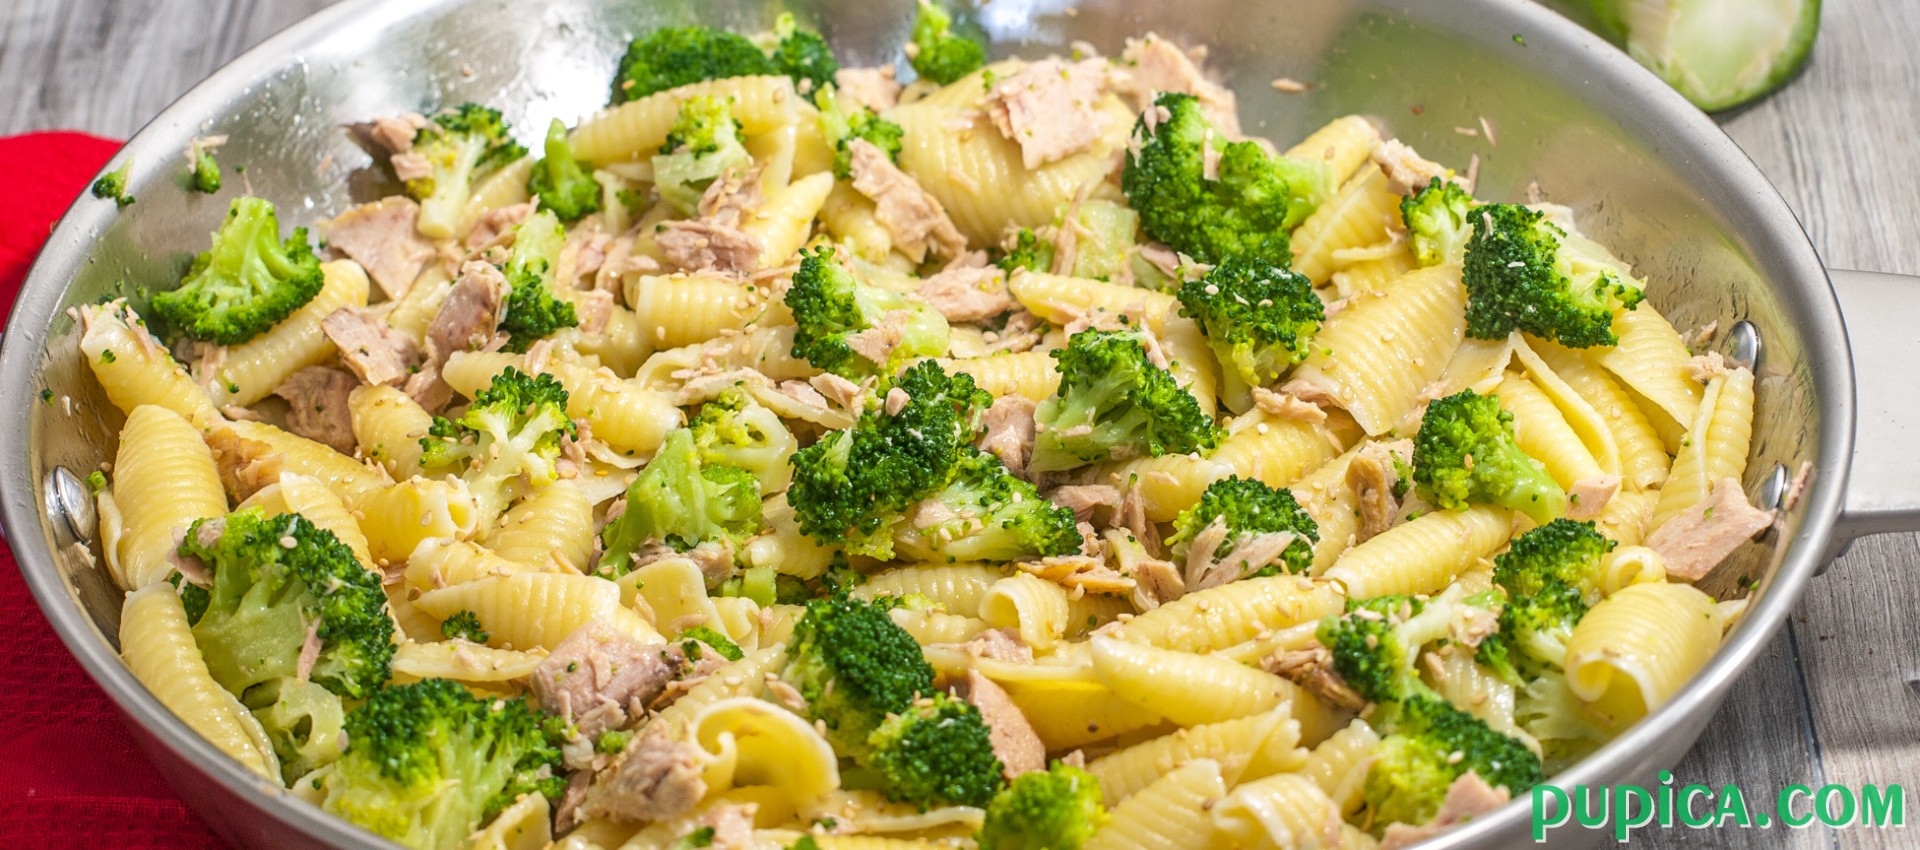 Pasta with Broccoli and Tuna